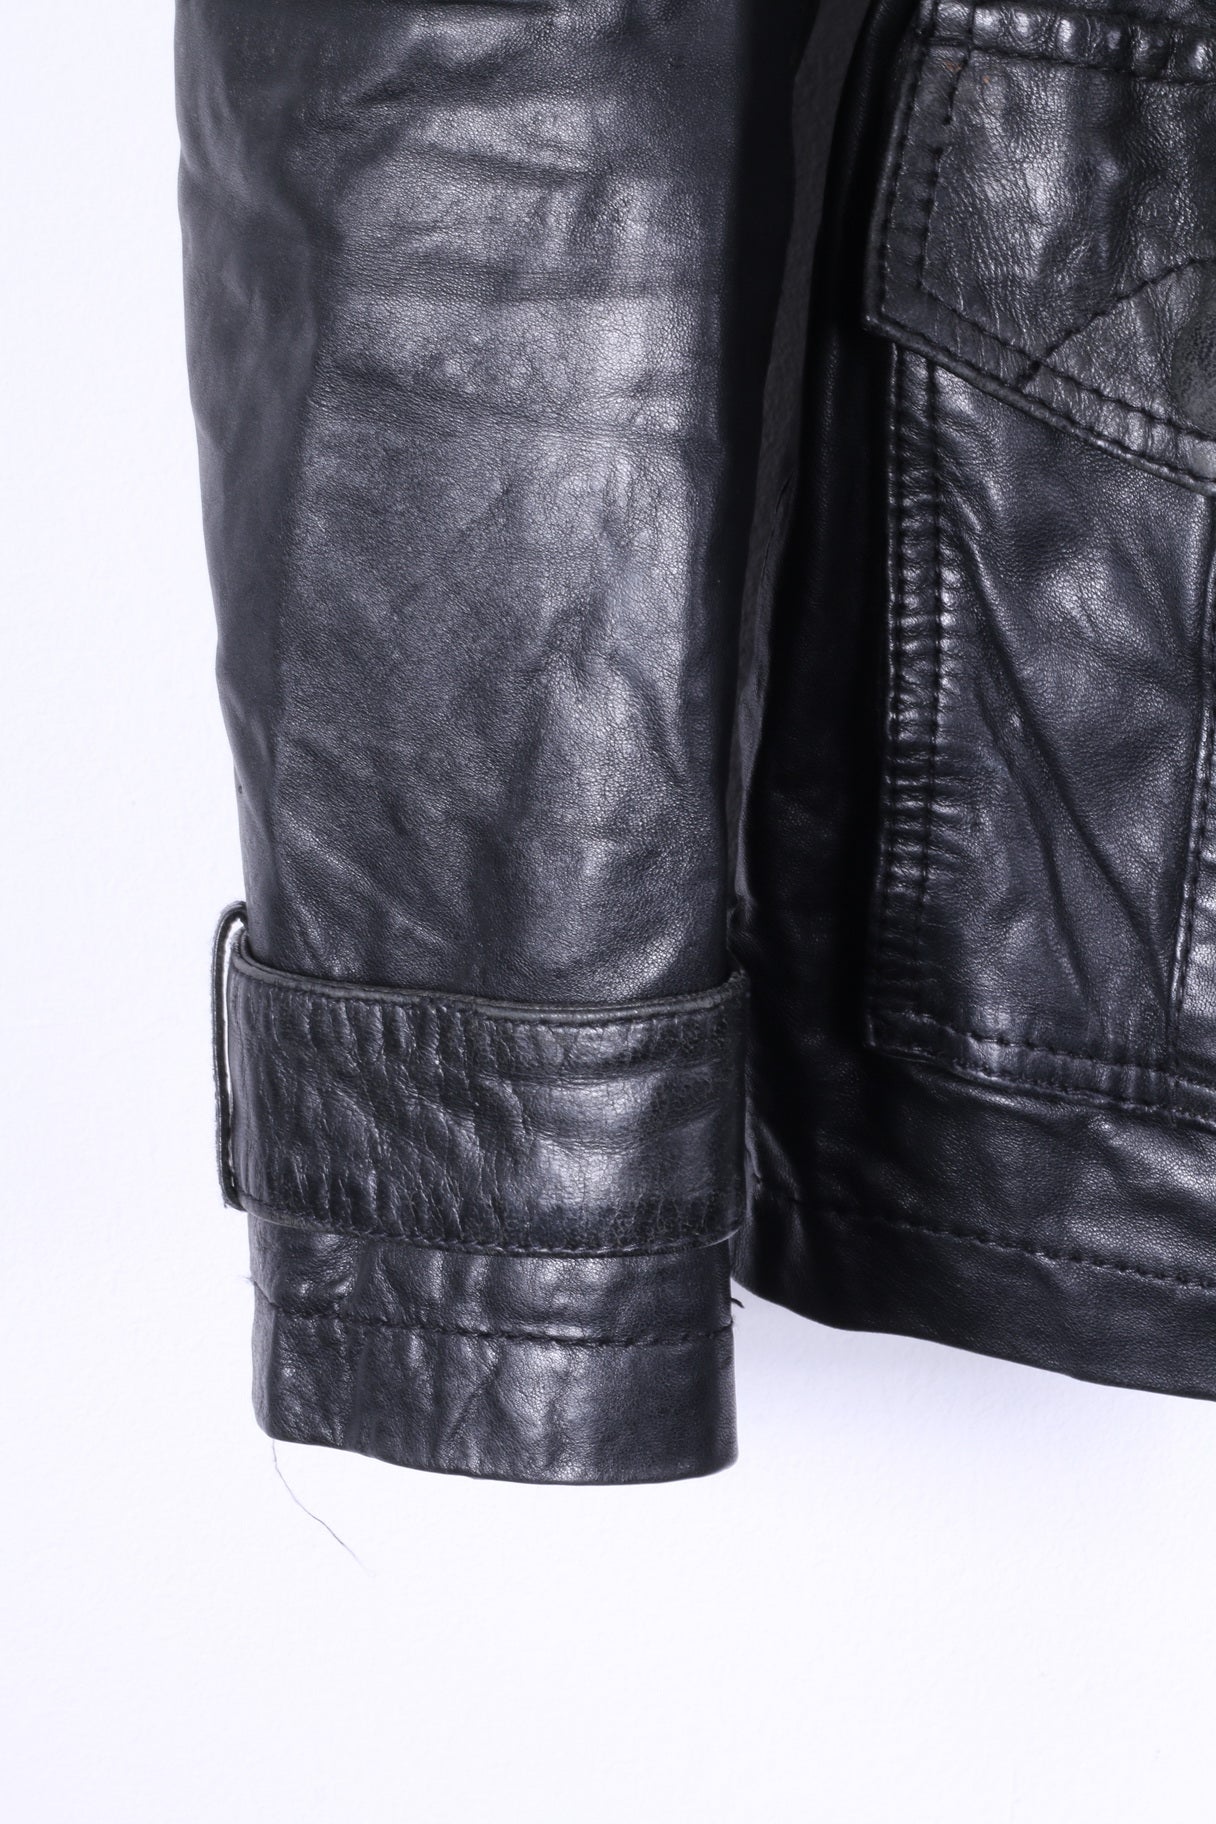 River Island Womens 10 S Jacket Black Leather Full Zipper Belted Biker Top